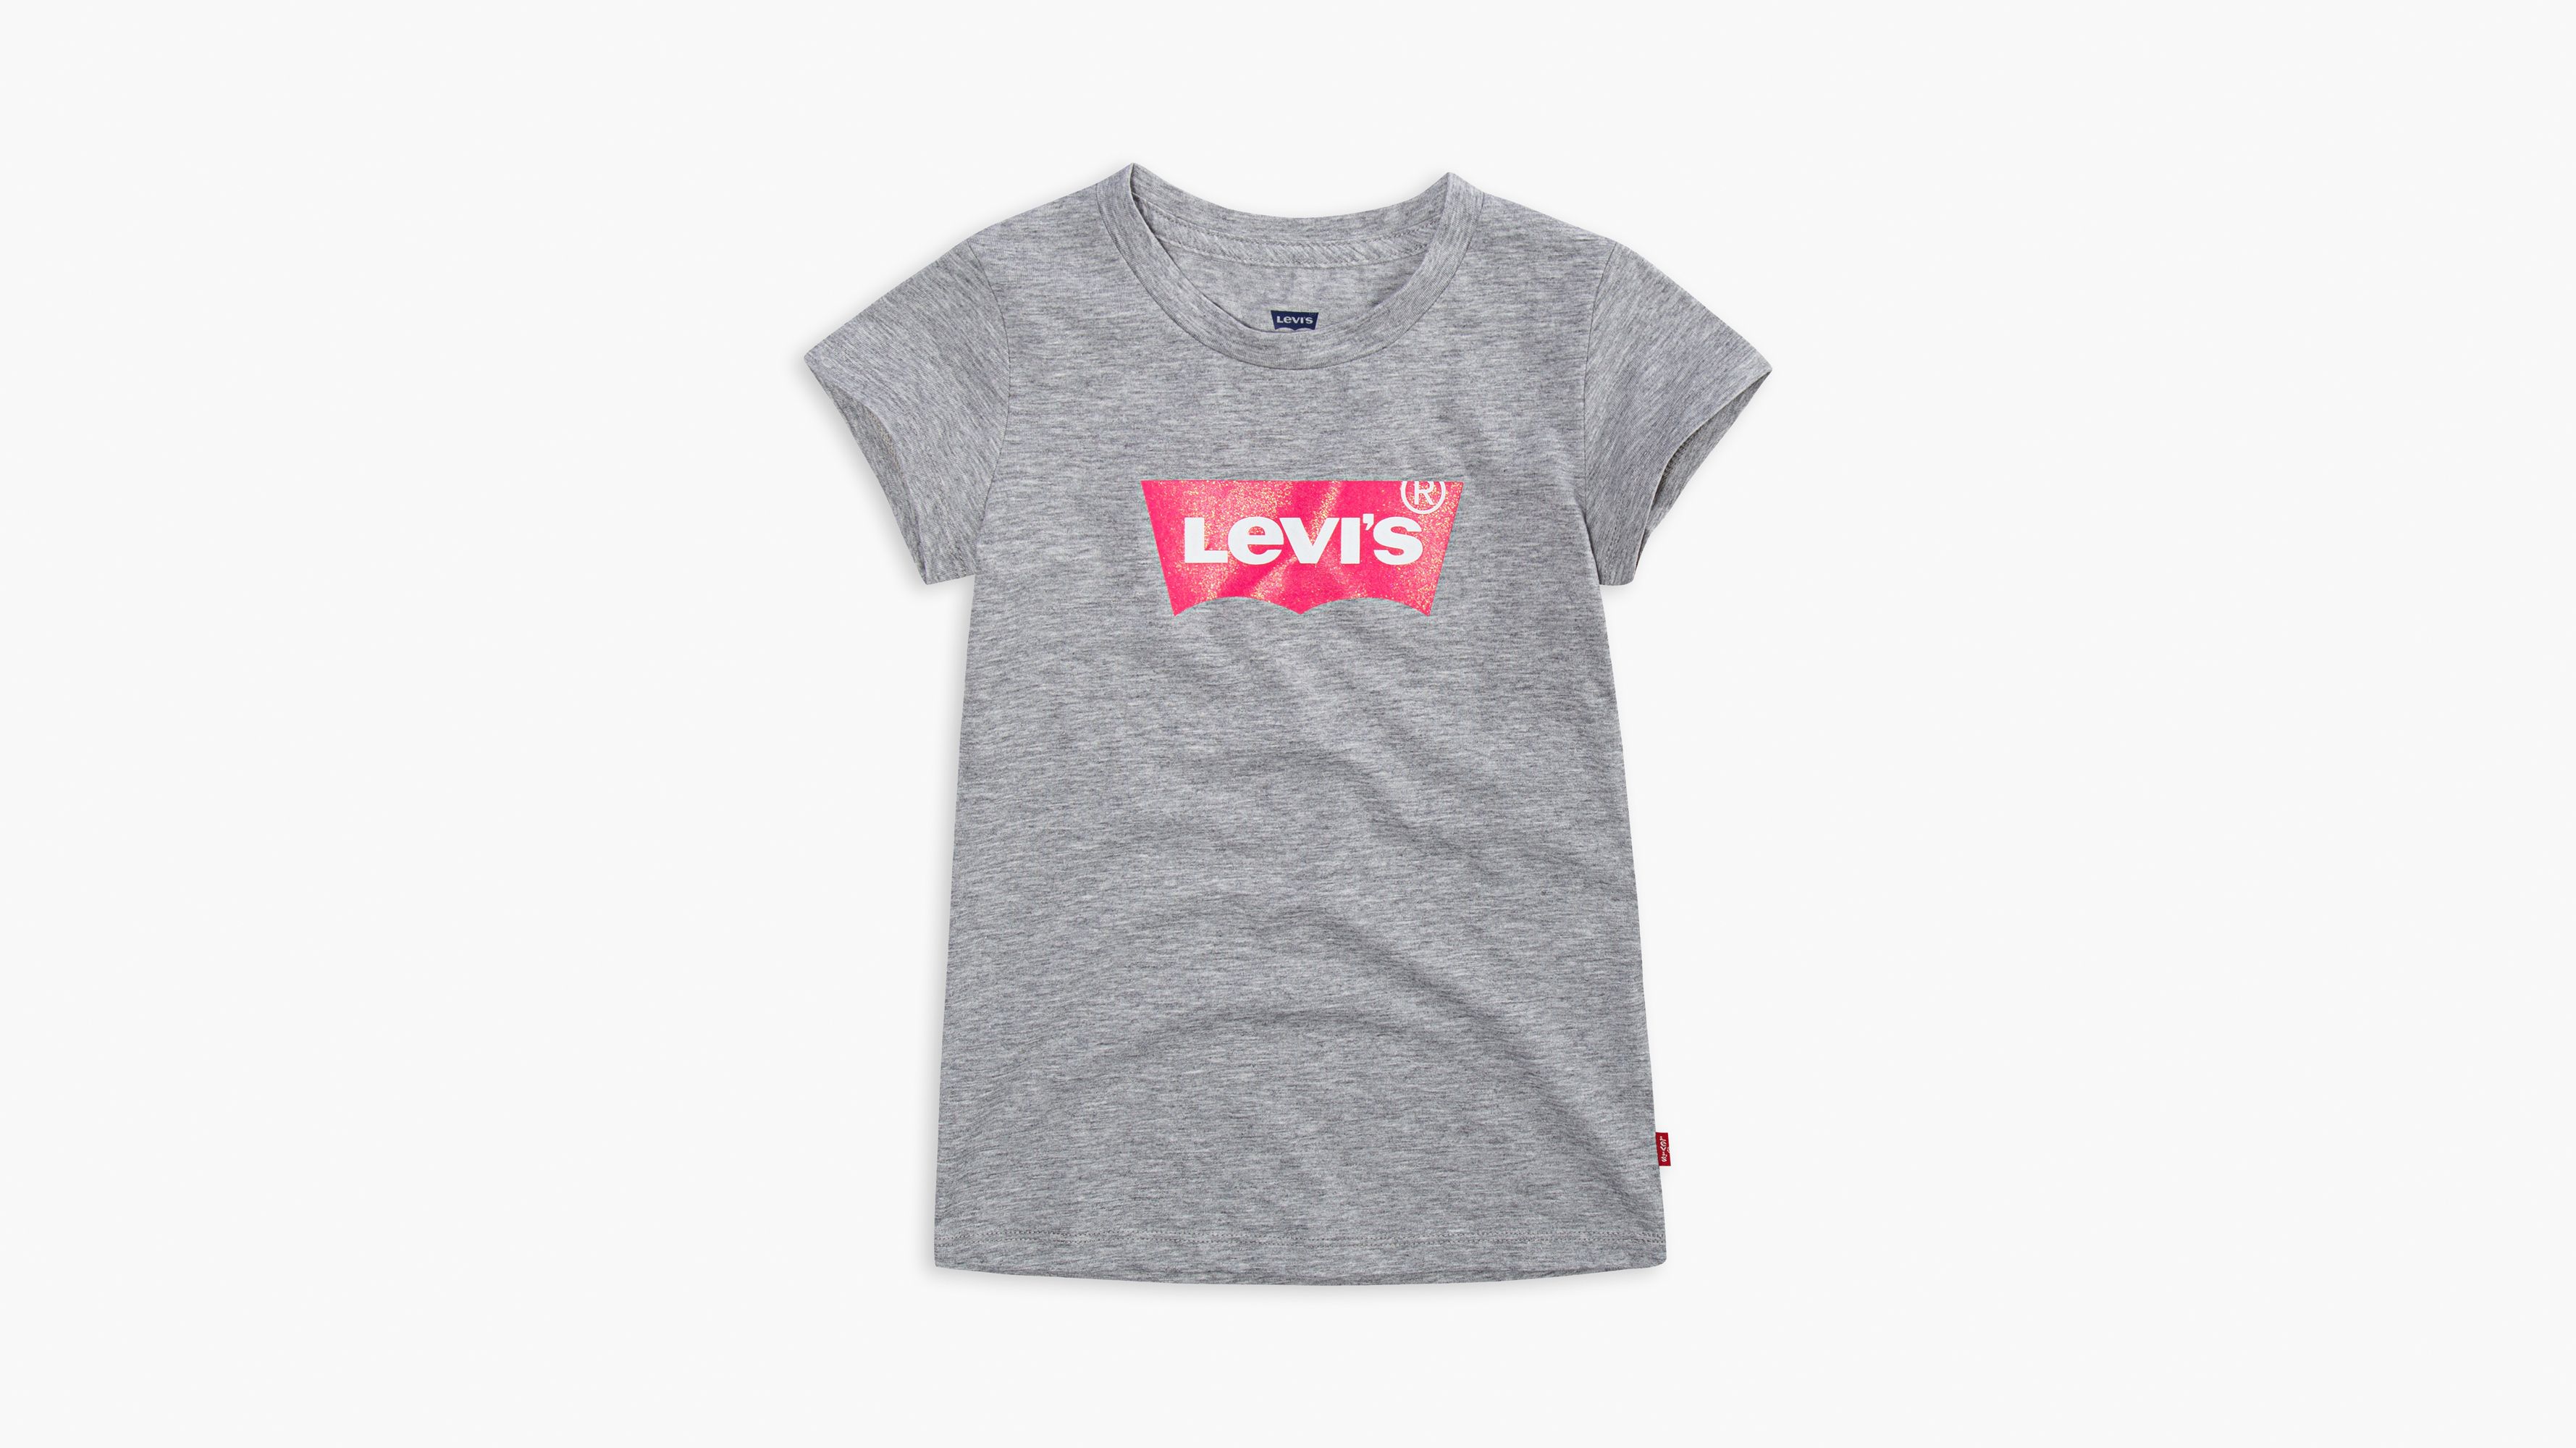 levi's tops for girls